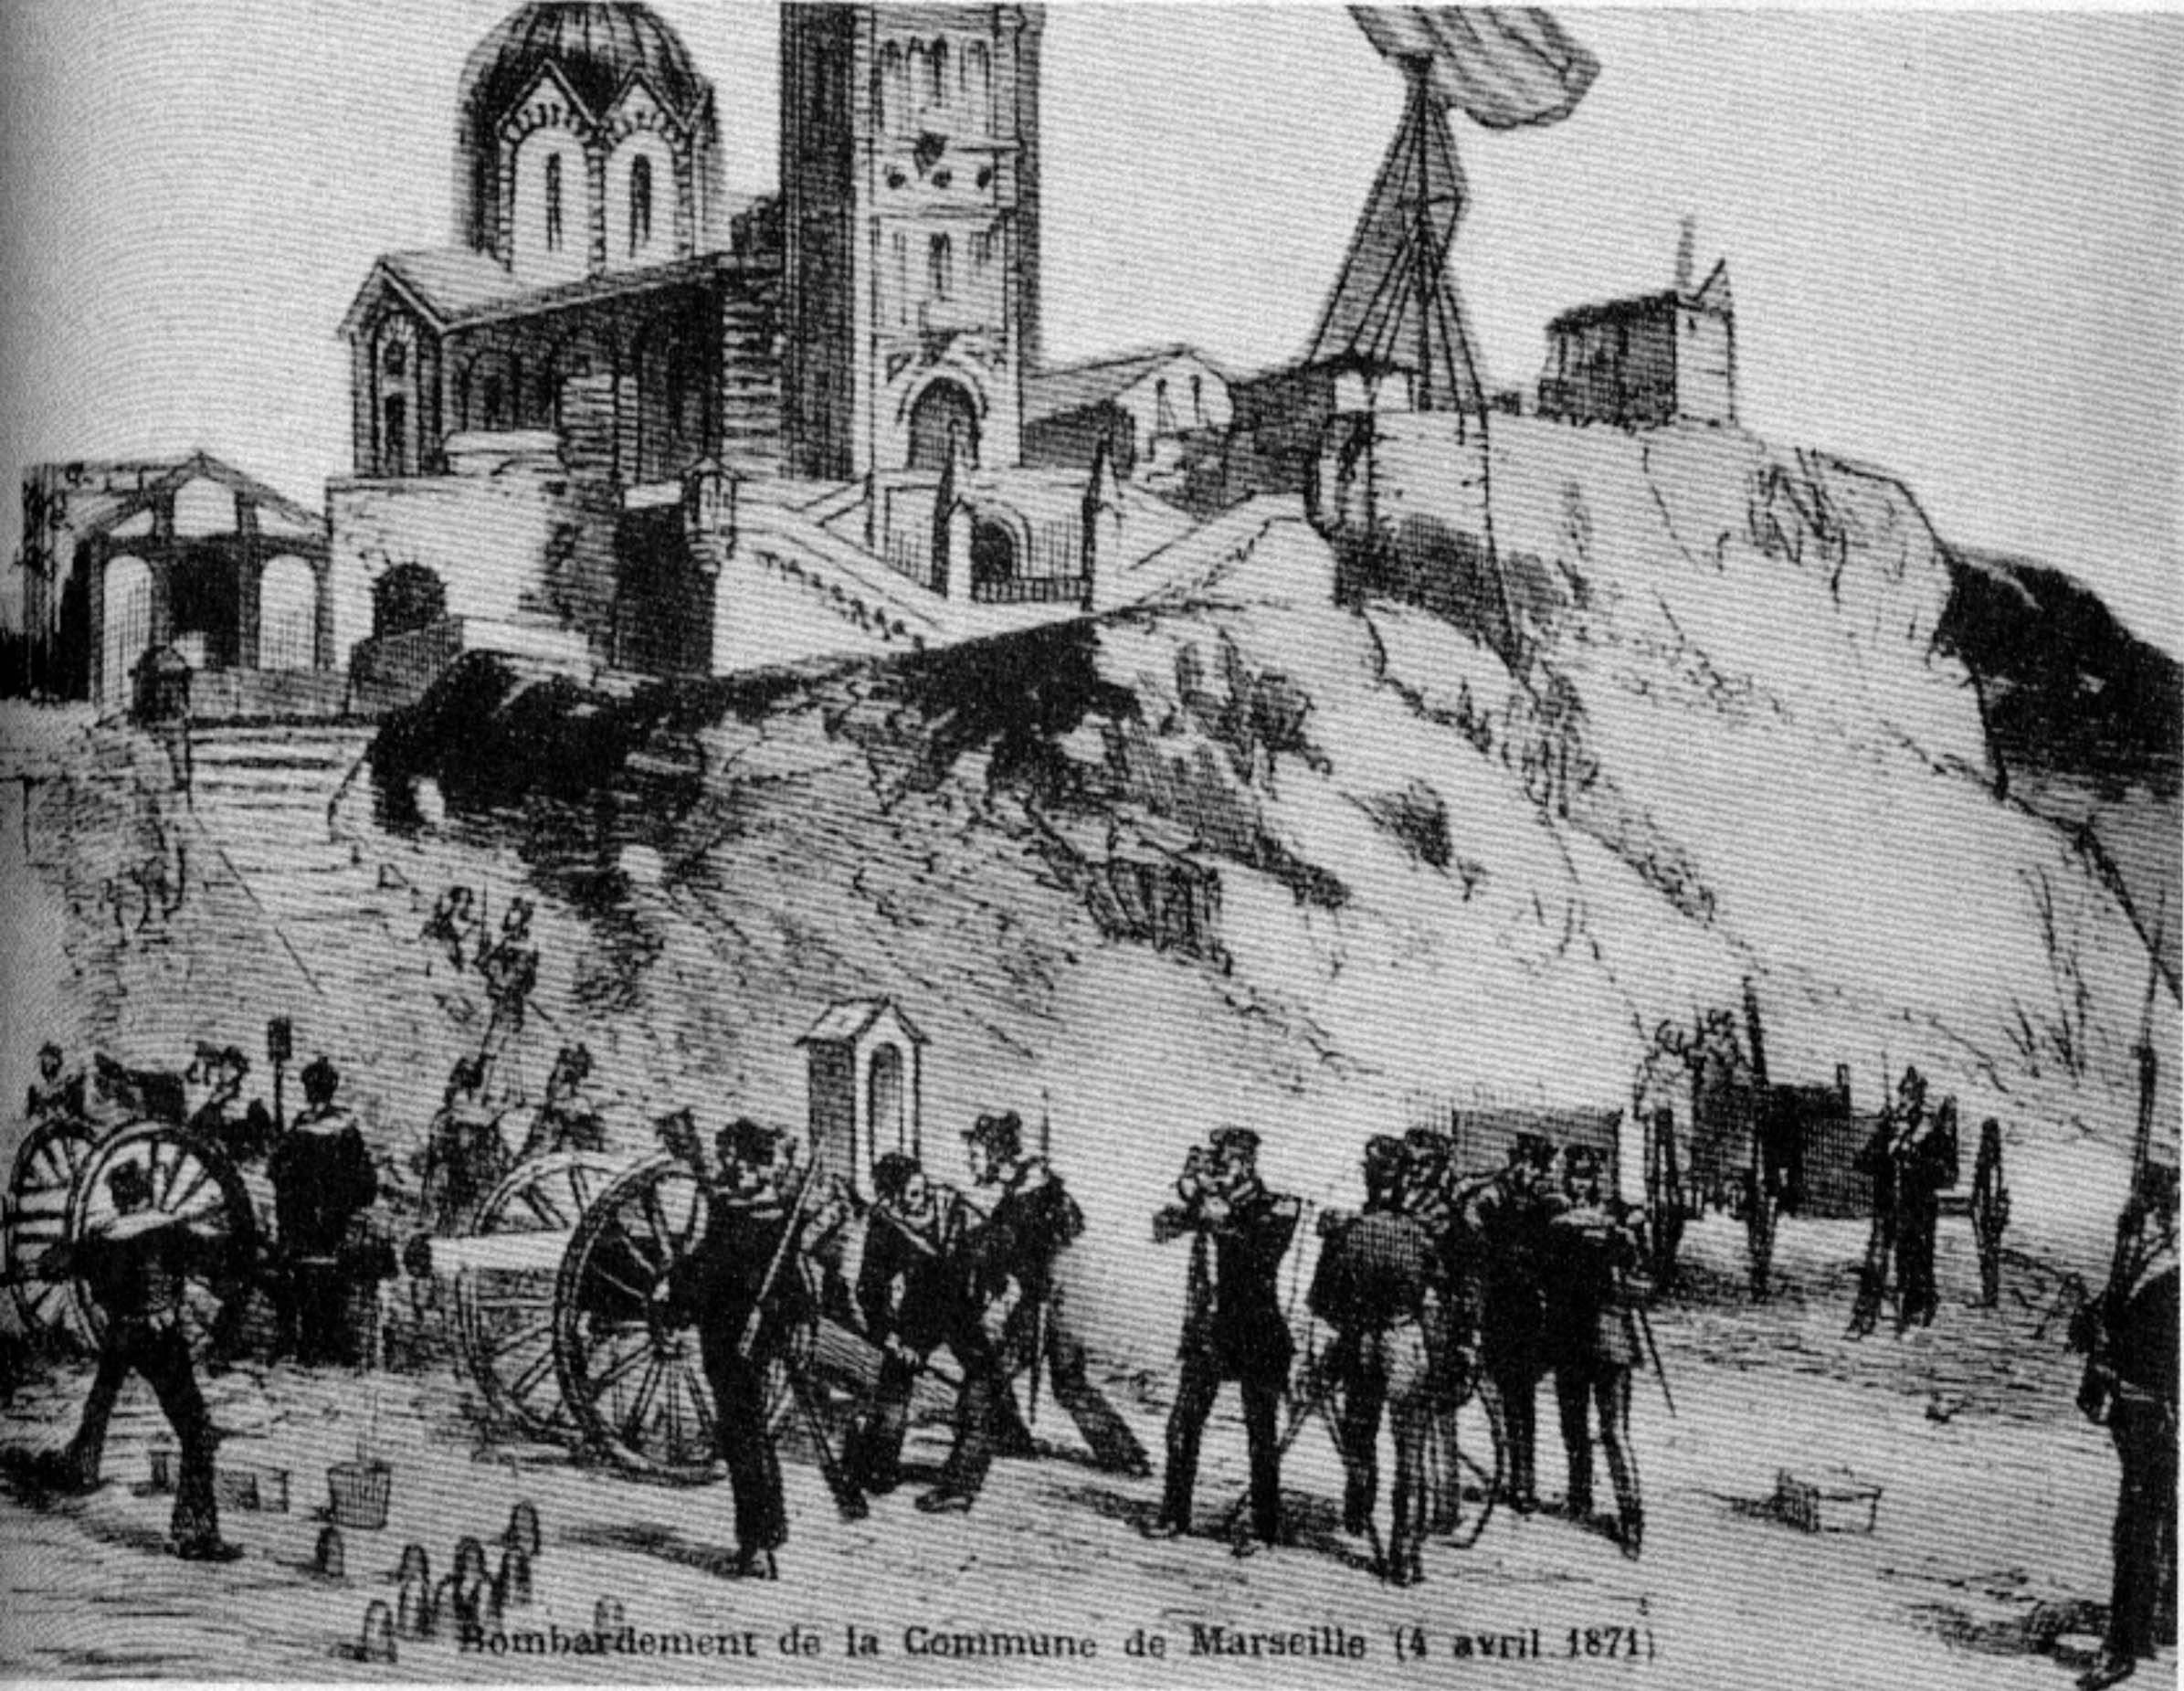 Notre-Dame de la Bombarde - Bombardement de la Commune de Marseille 4 avril 1871